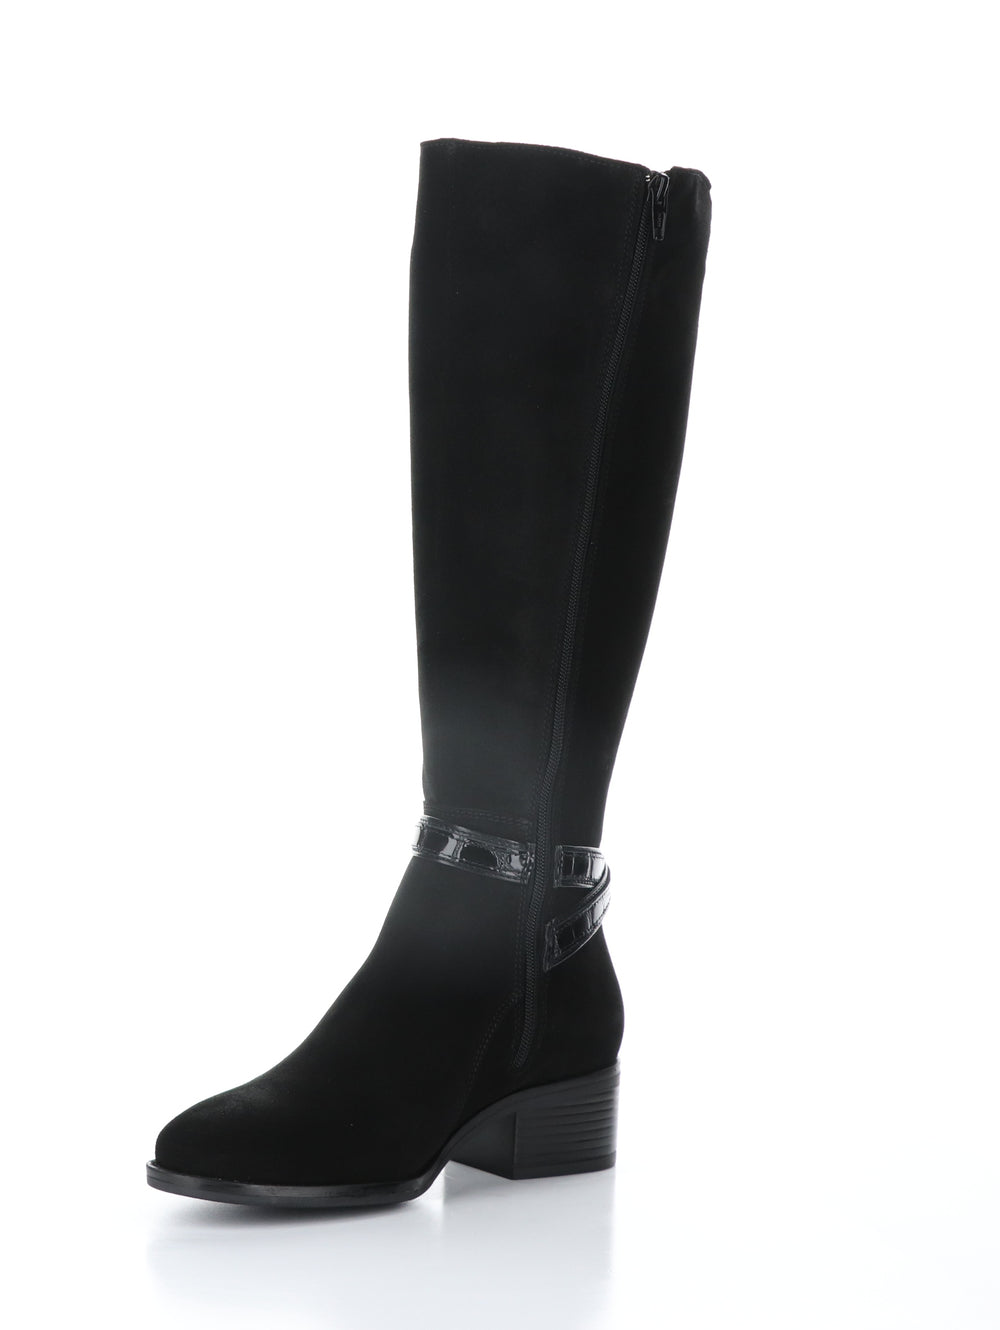 JADE Black Zip Up Boots|JADE Bottes avec Fermeture Zippée in Noir